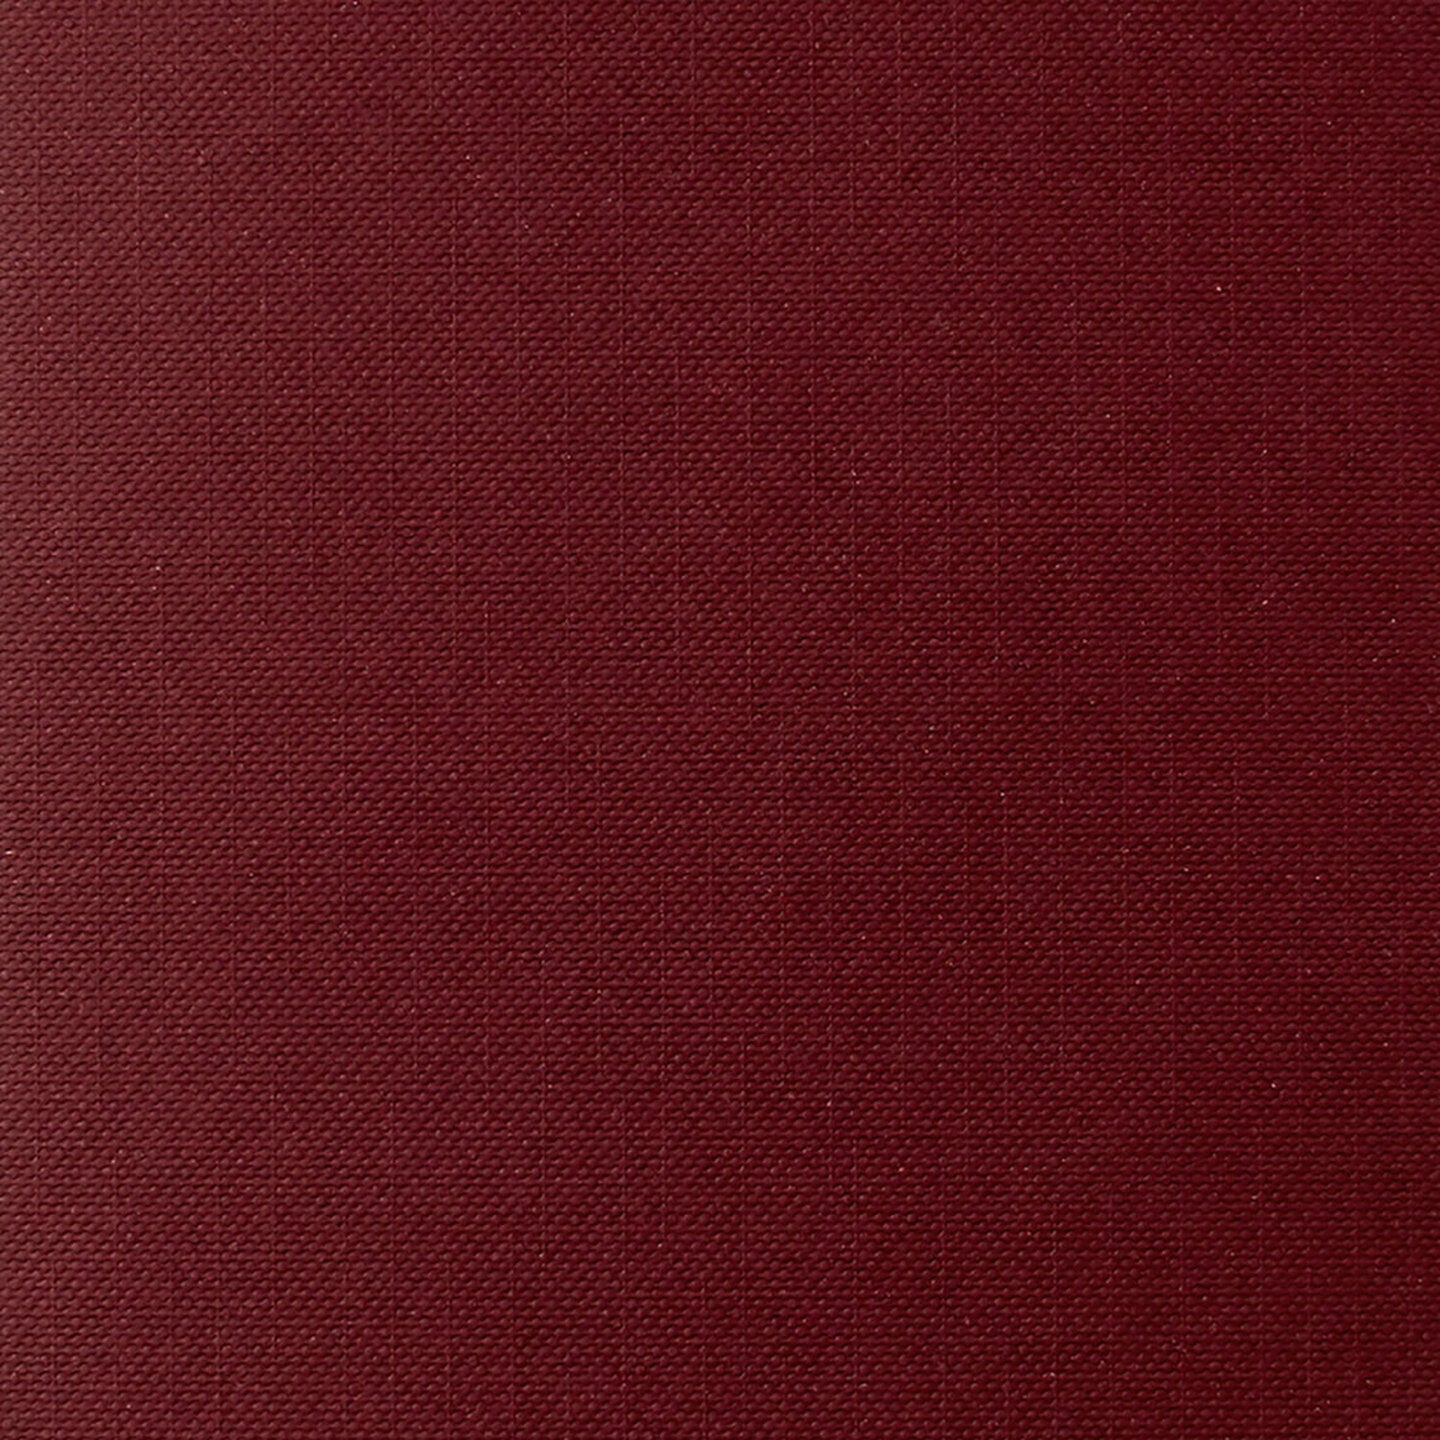 Cricut Joy™ Insert Cards, New Romantic Sampler 4.25" x 5.5"